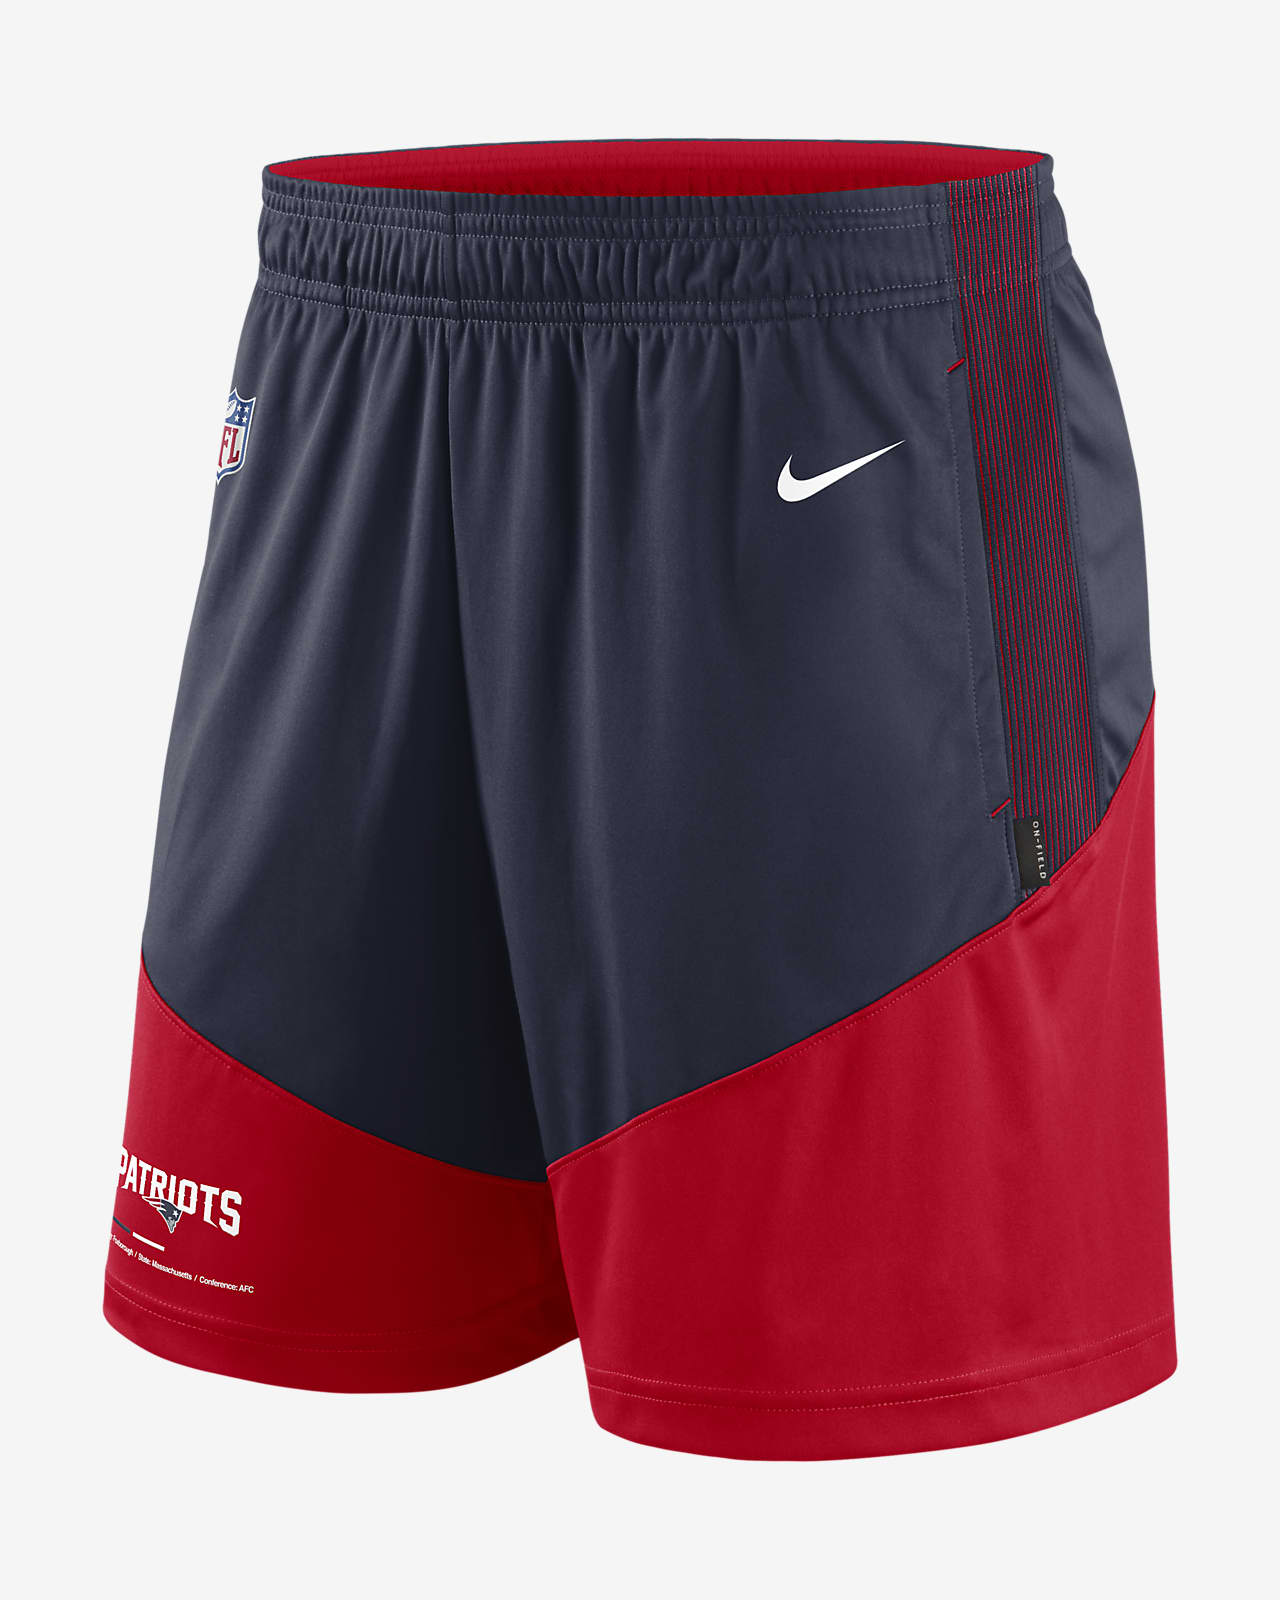 Nike Primary Lockup (NFL New Patriots) Men's Shorts. Nike